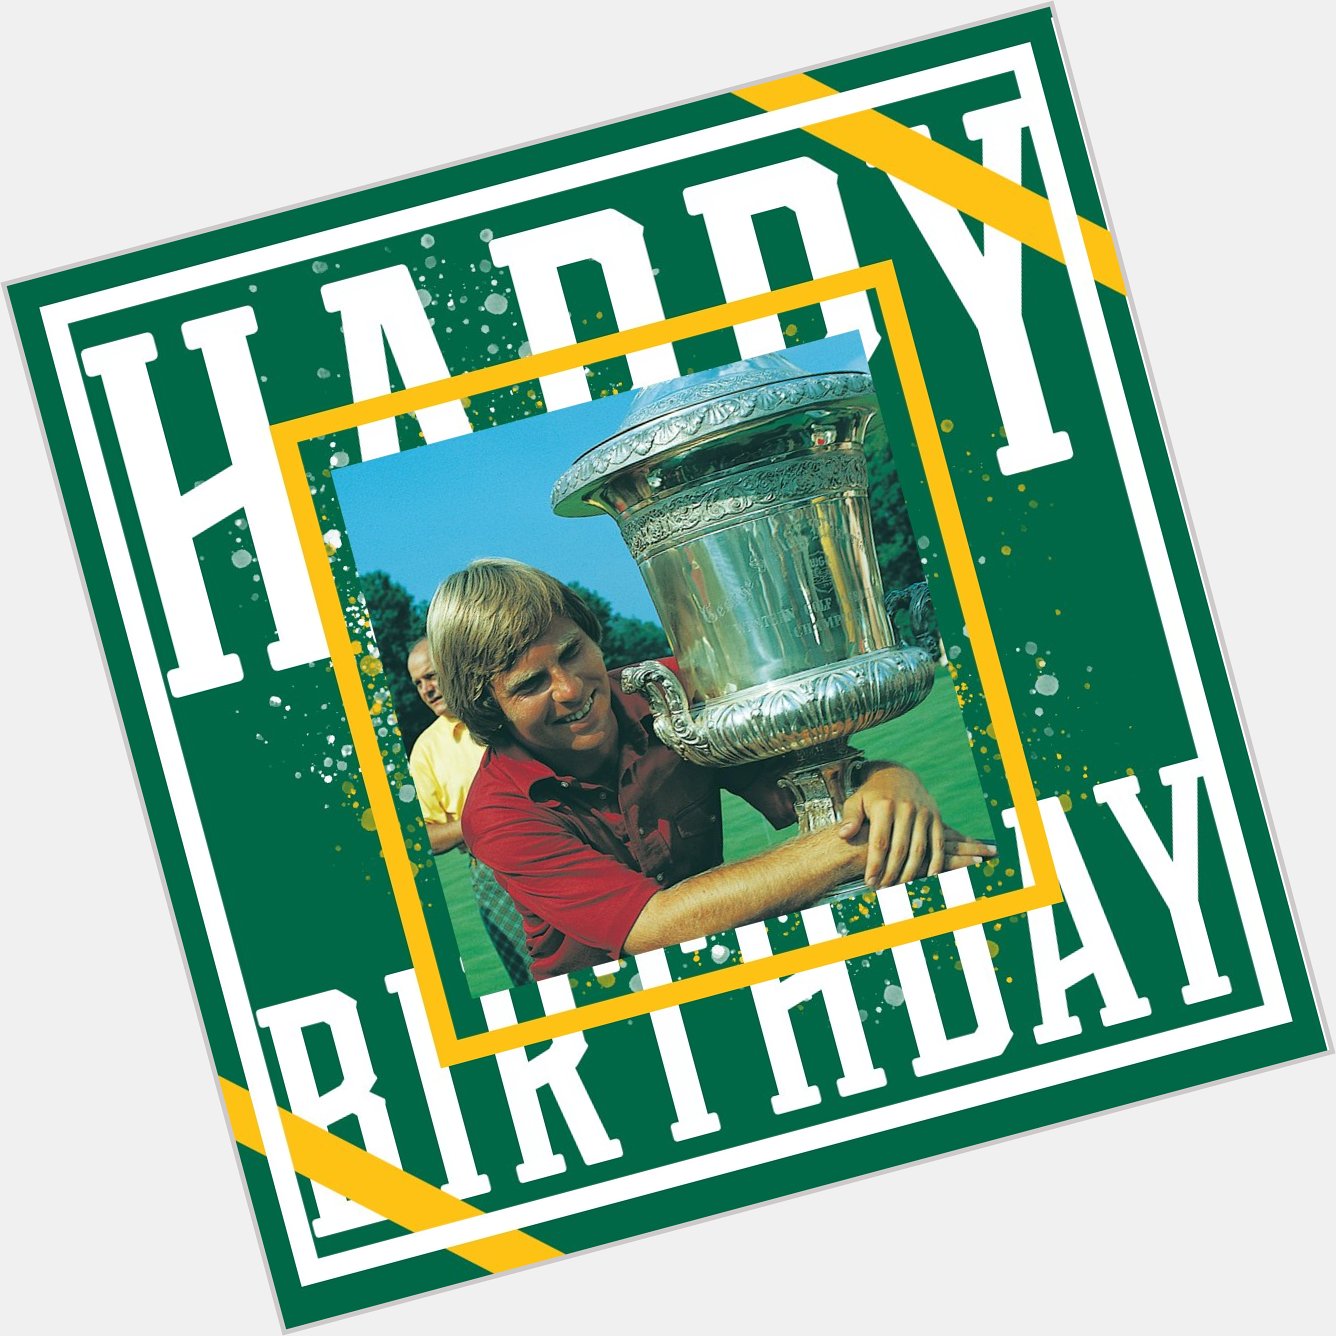 Happy birthday to 1973 champion Ben Crenshaw! 